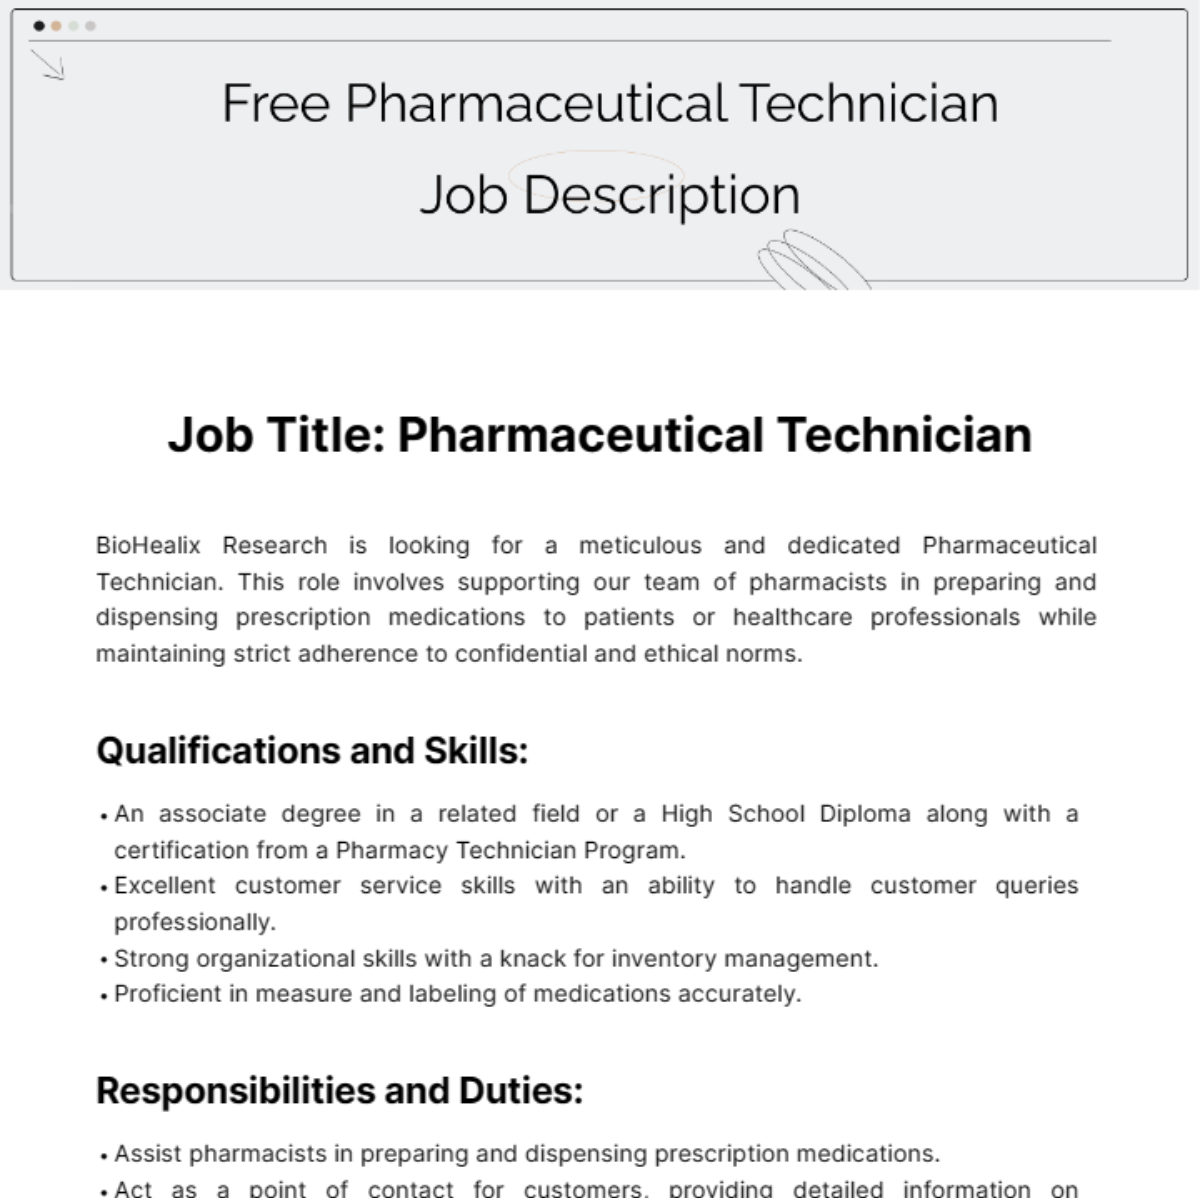 Free Pharmaceutical Technician Job Description Template